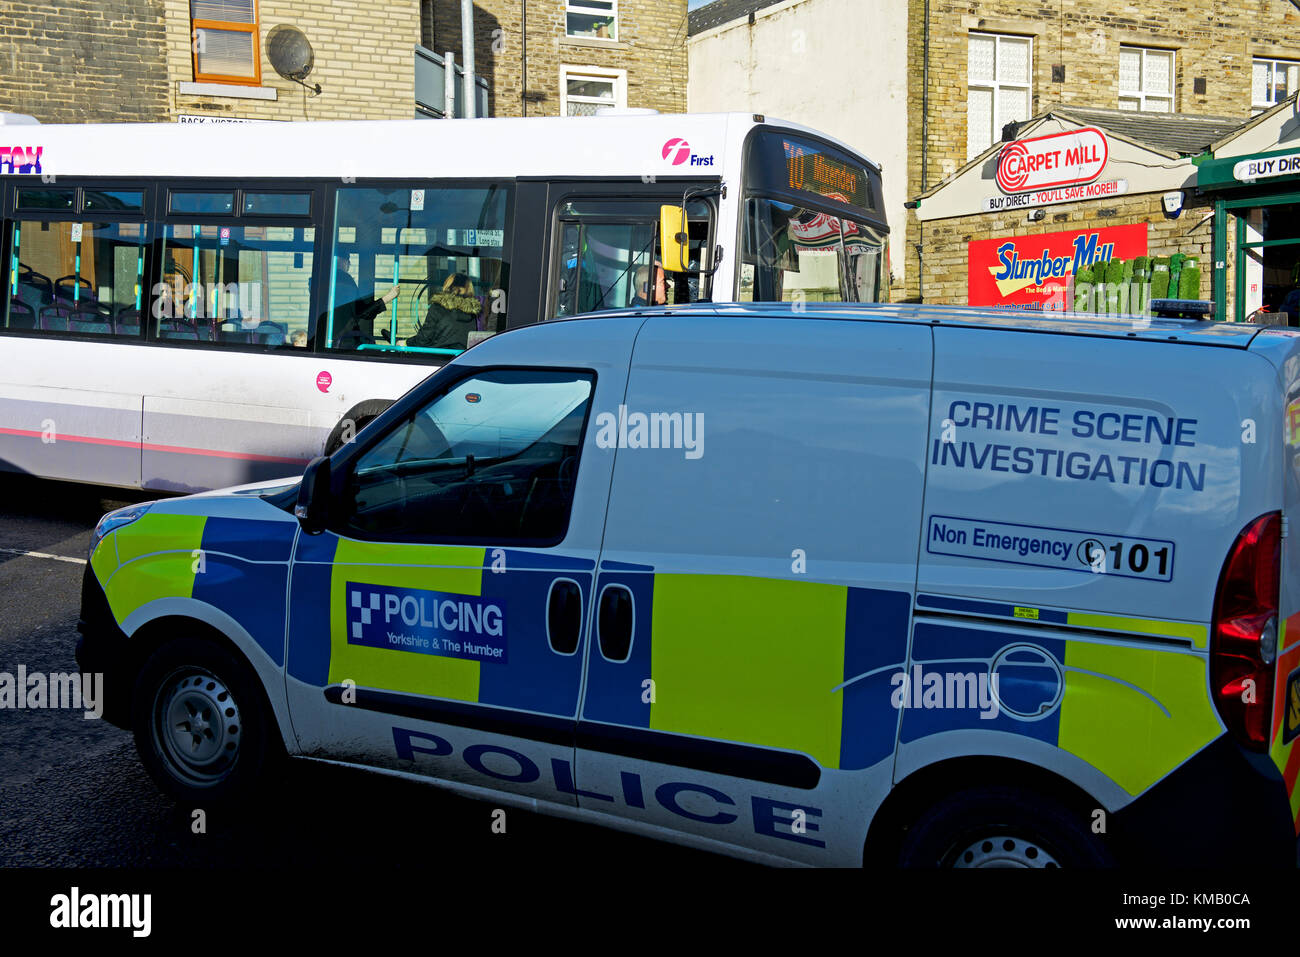 Crime Scene Investigation police van, and bus, England UK Stock Photo